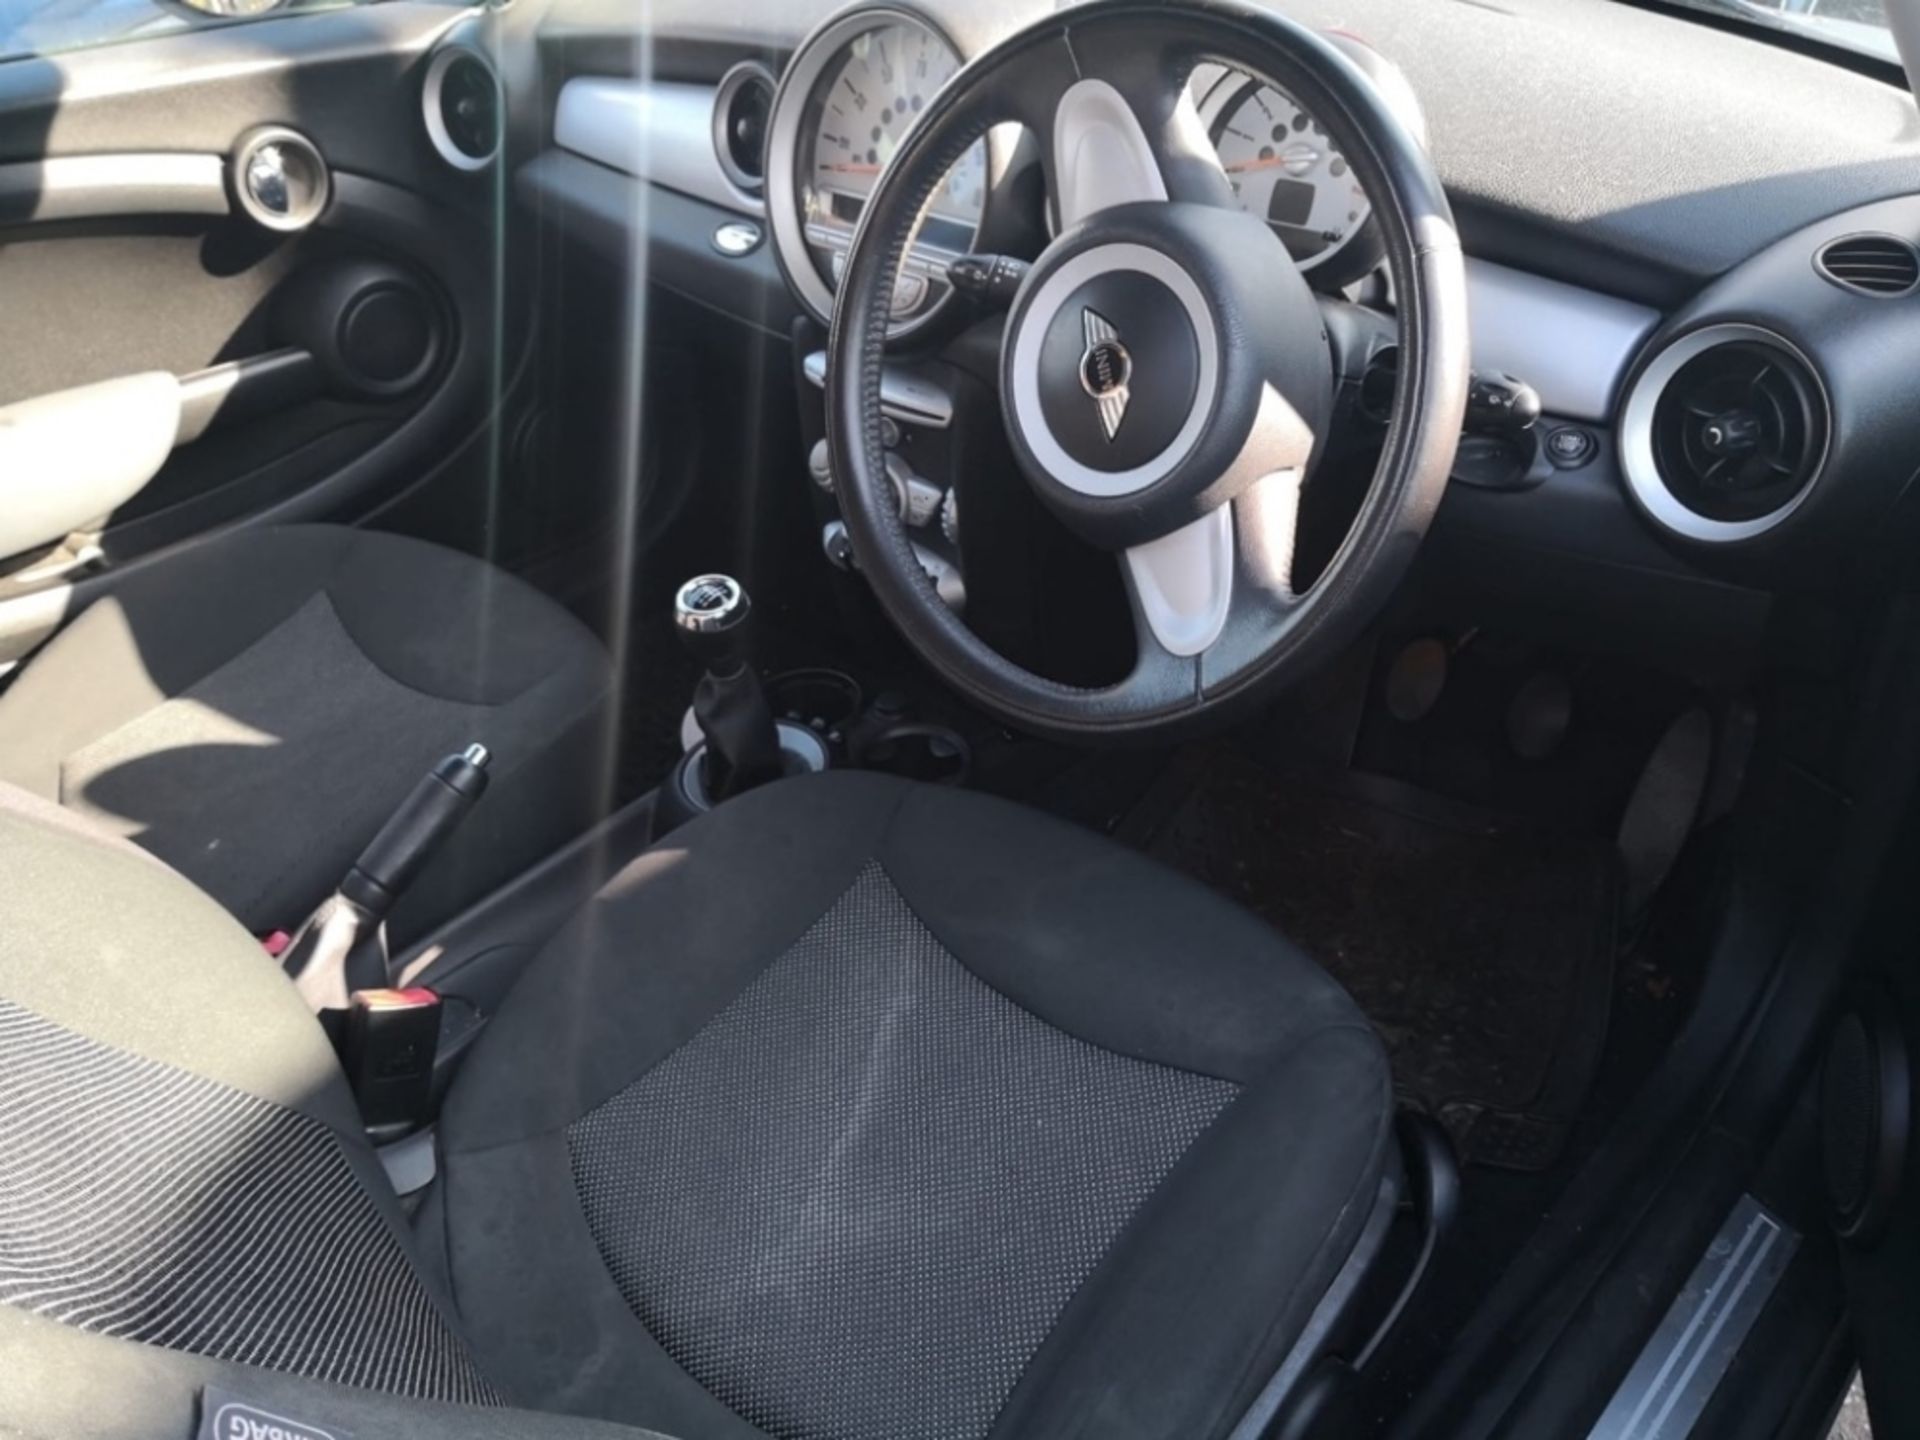 Mini Hatch 1.4 One 3Dr – Petrol – Manual - Black Reg: FL58 HWC Mileage: 60,000 MOT: 17-08-2019 - Image 5 of 6